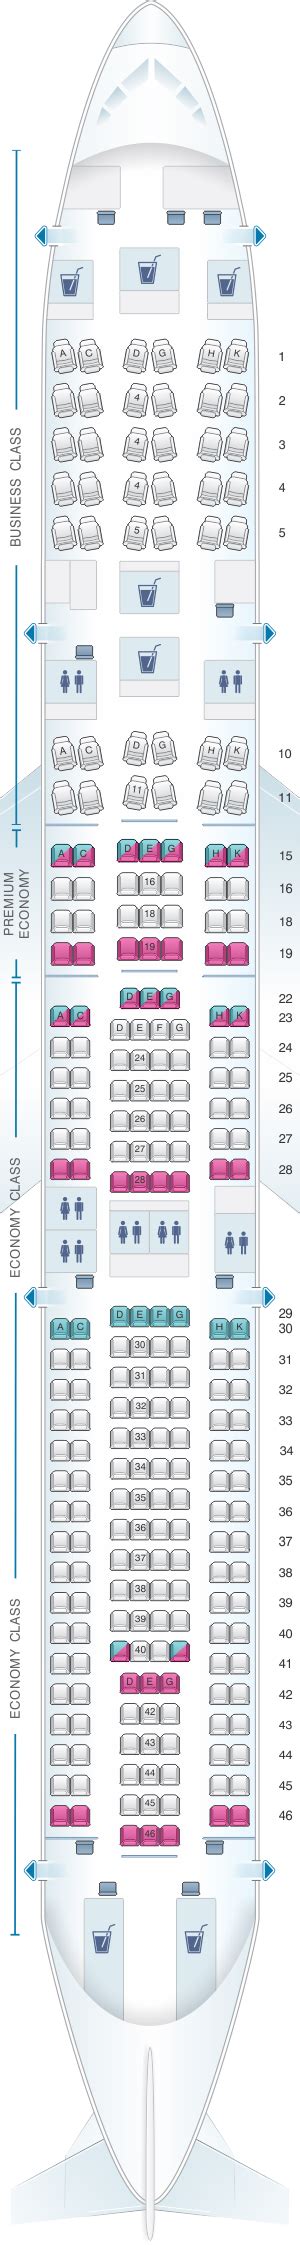 Airbus A330 300 Seat Plan Lufthansa My Bios